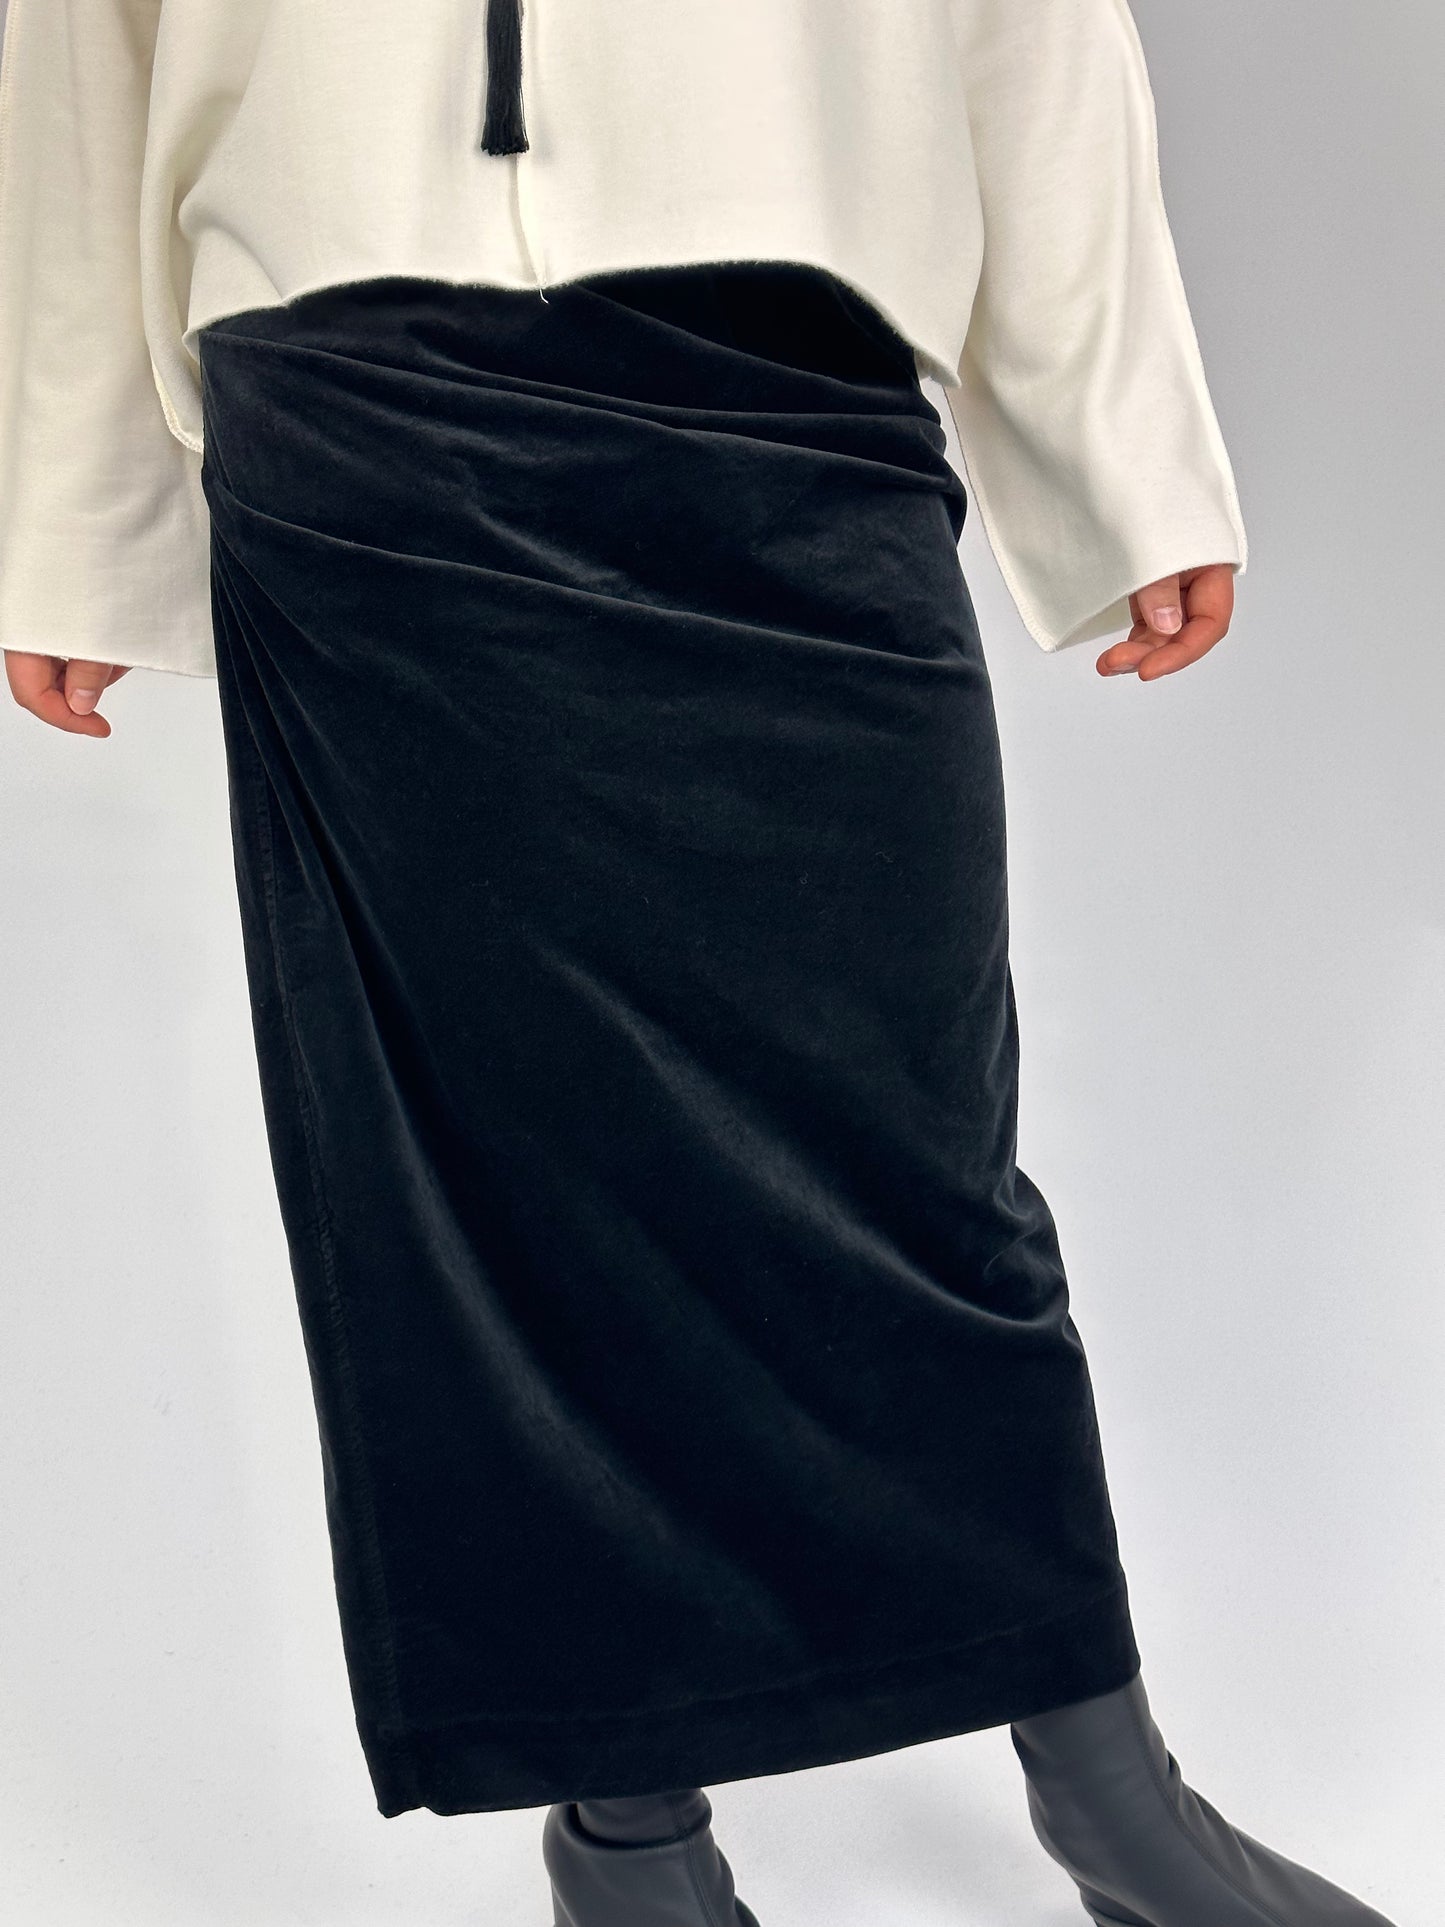 LVL Grande Skirt Black